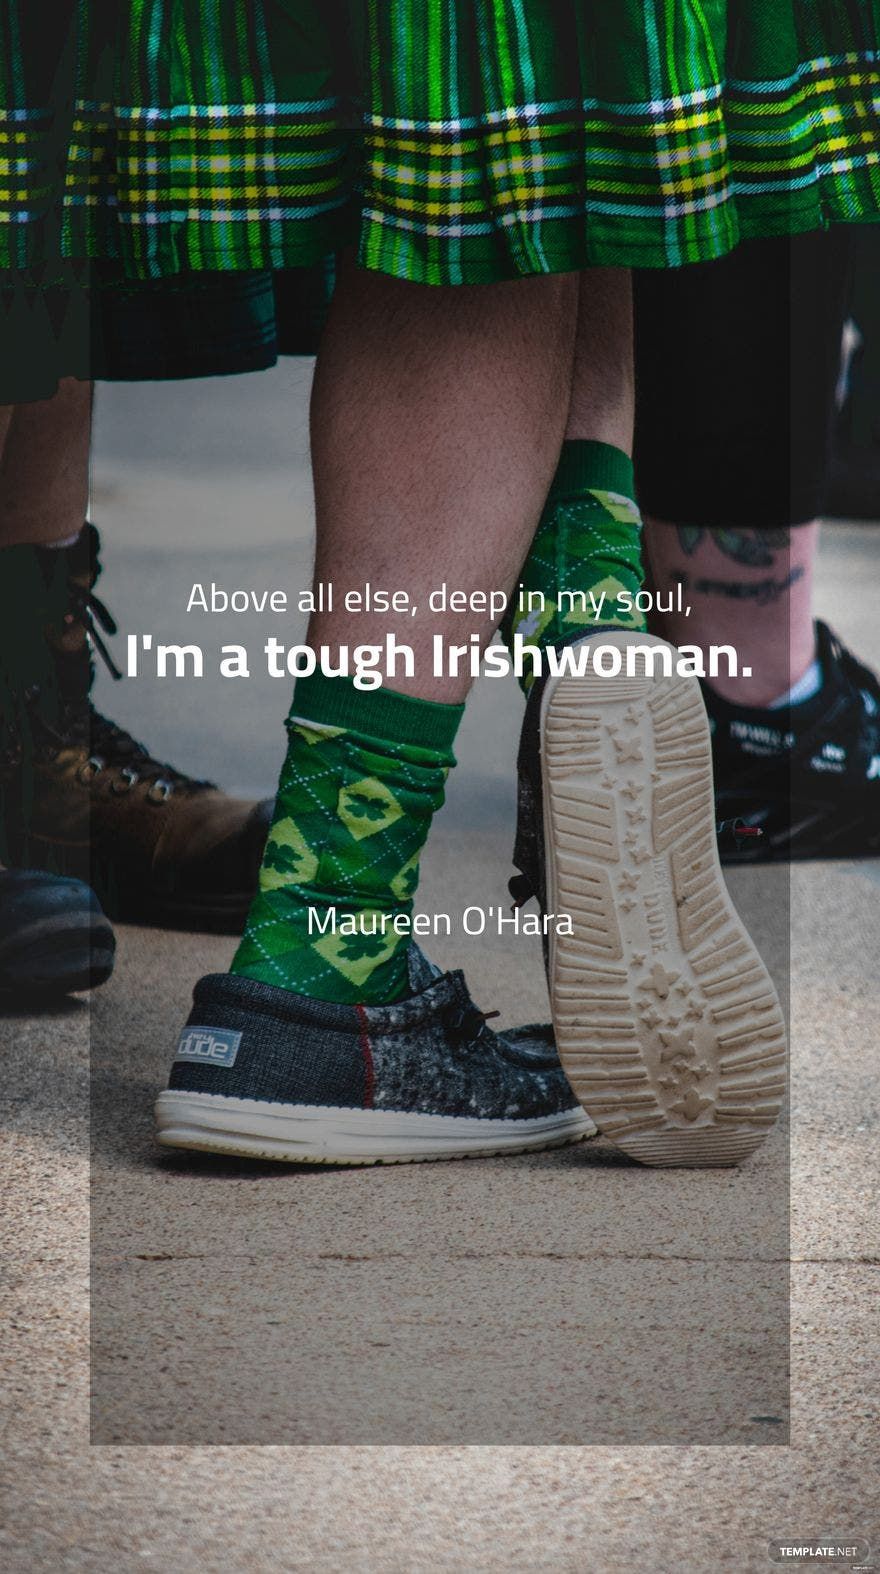 Free Maureen O'Hara - Above all else, deep in my soul, I'm a tough Irishwoman.